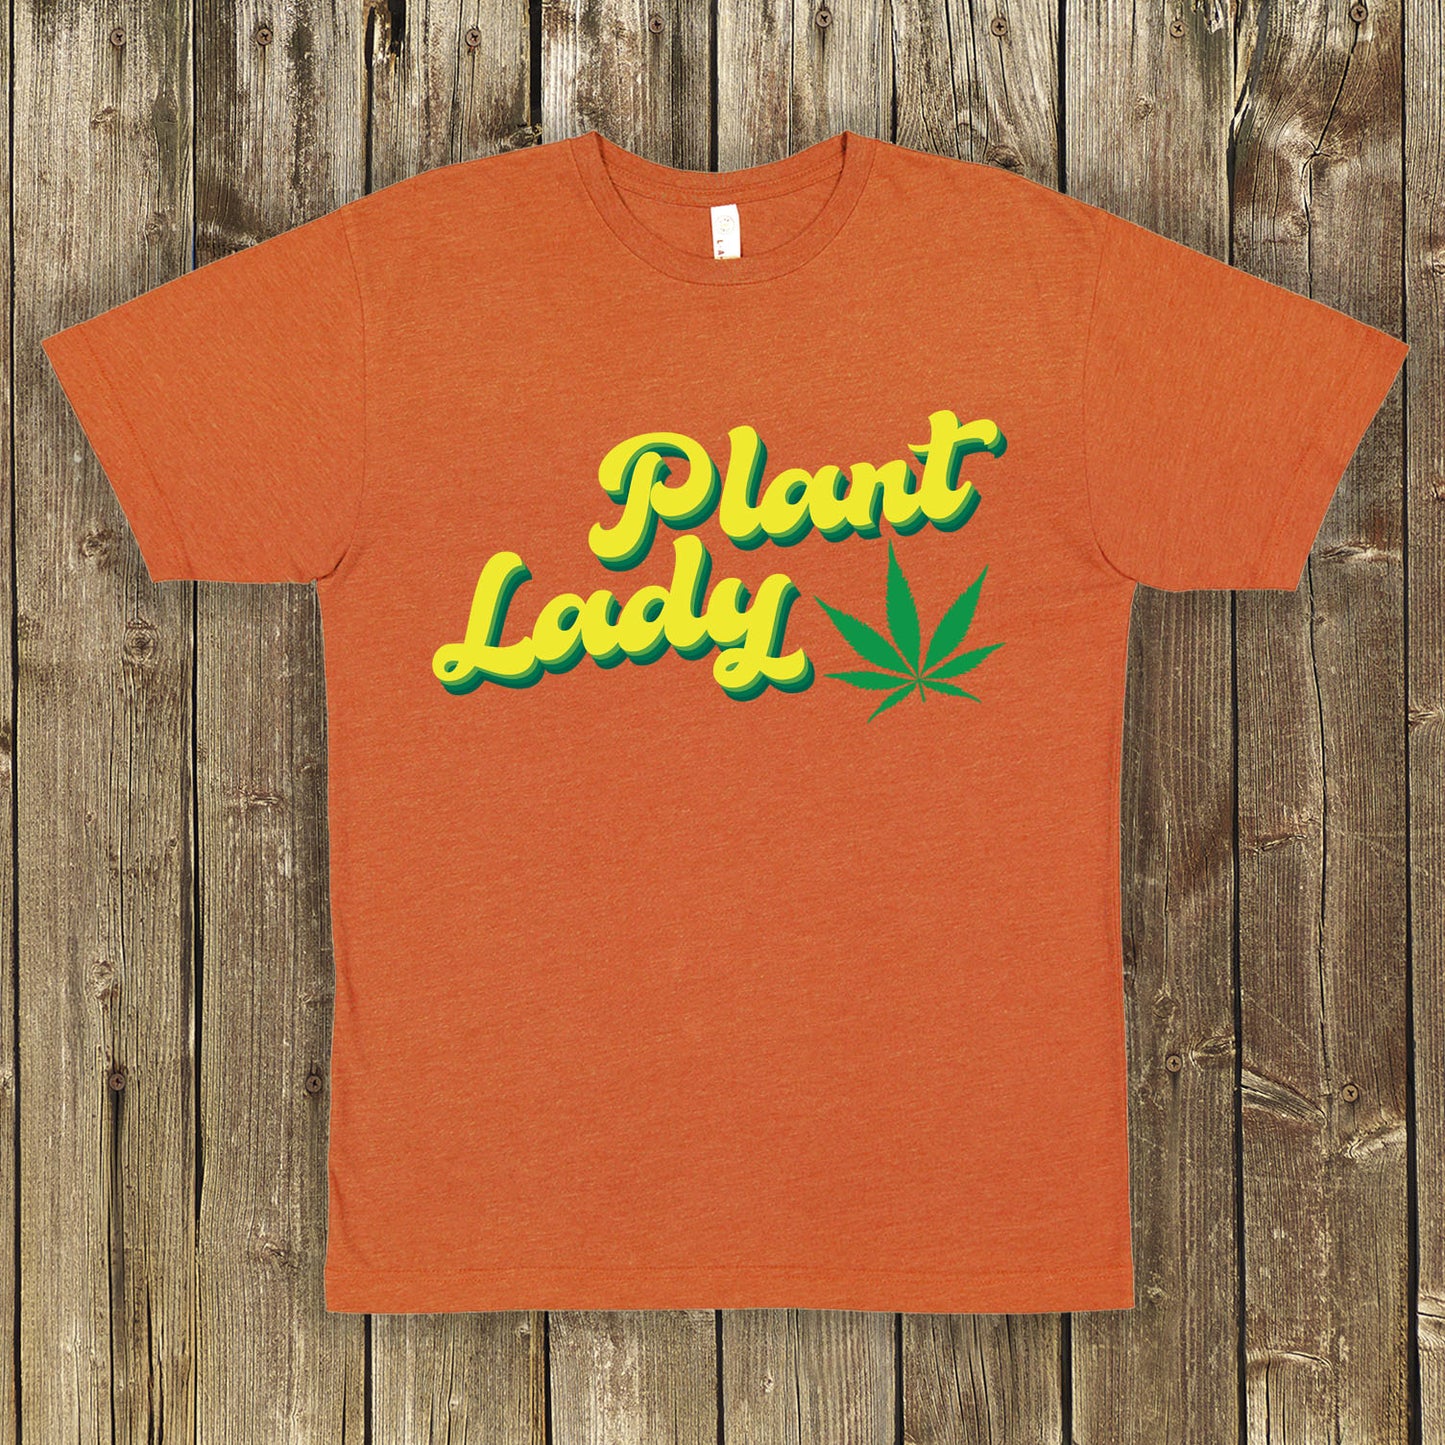 Plant Lady Shirt